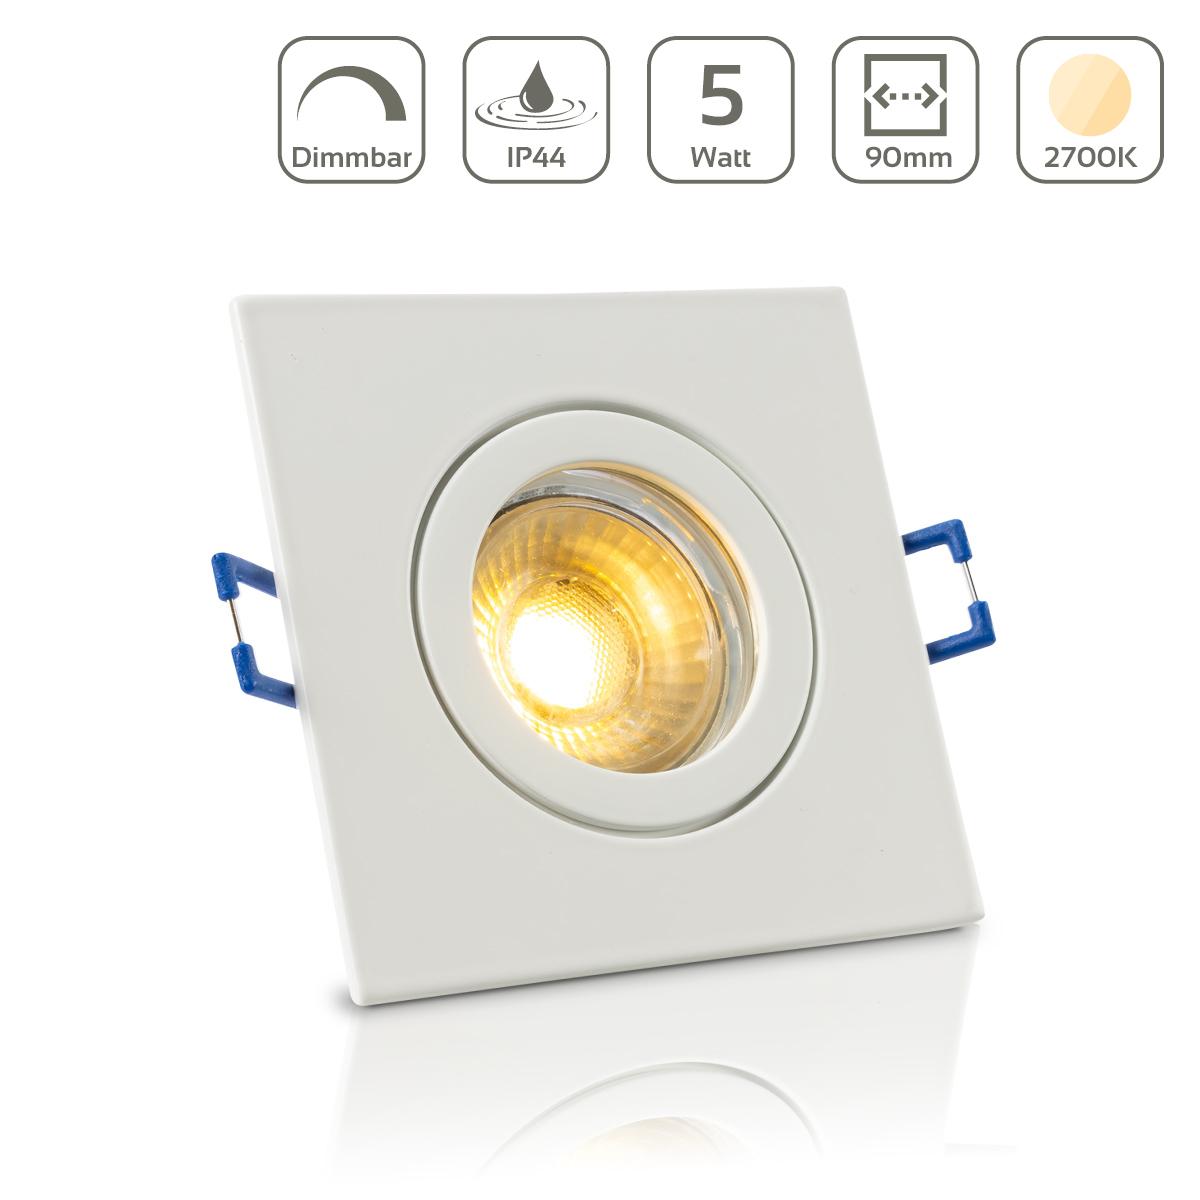 Einbauspot IP44 eckig - Farbe:  weiß - LED Leuchtmittel:  GU10 5W warmweiß dimmbar